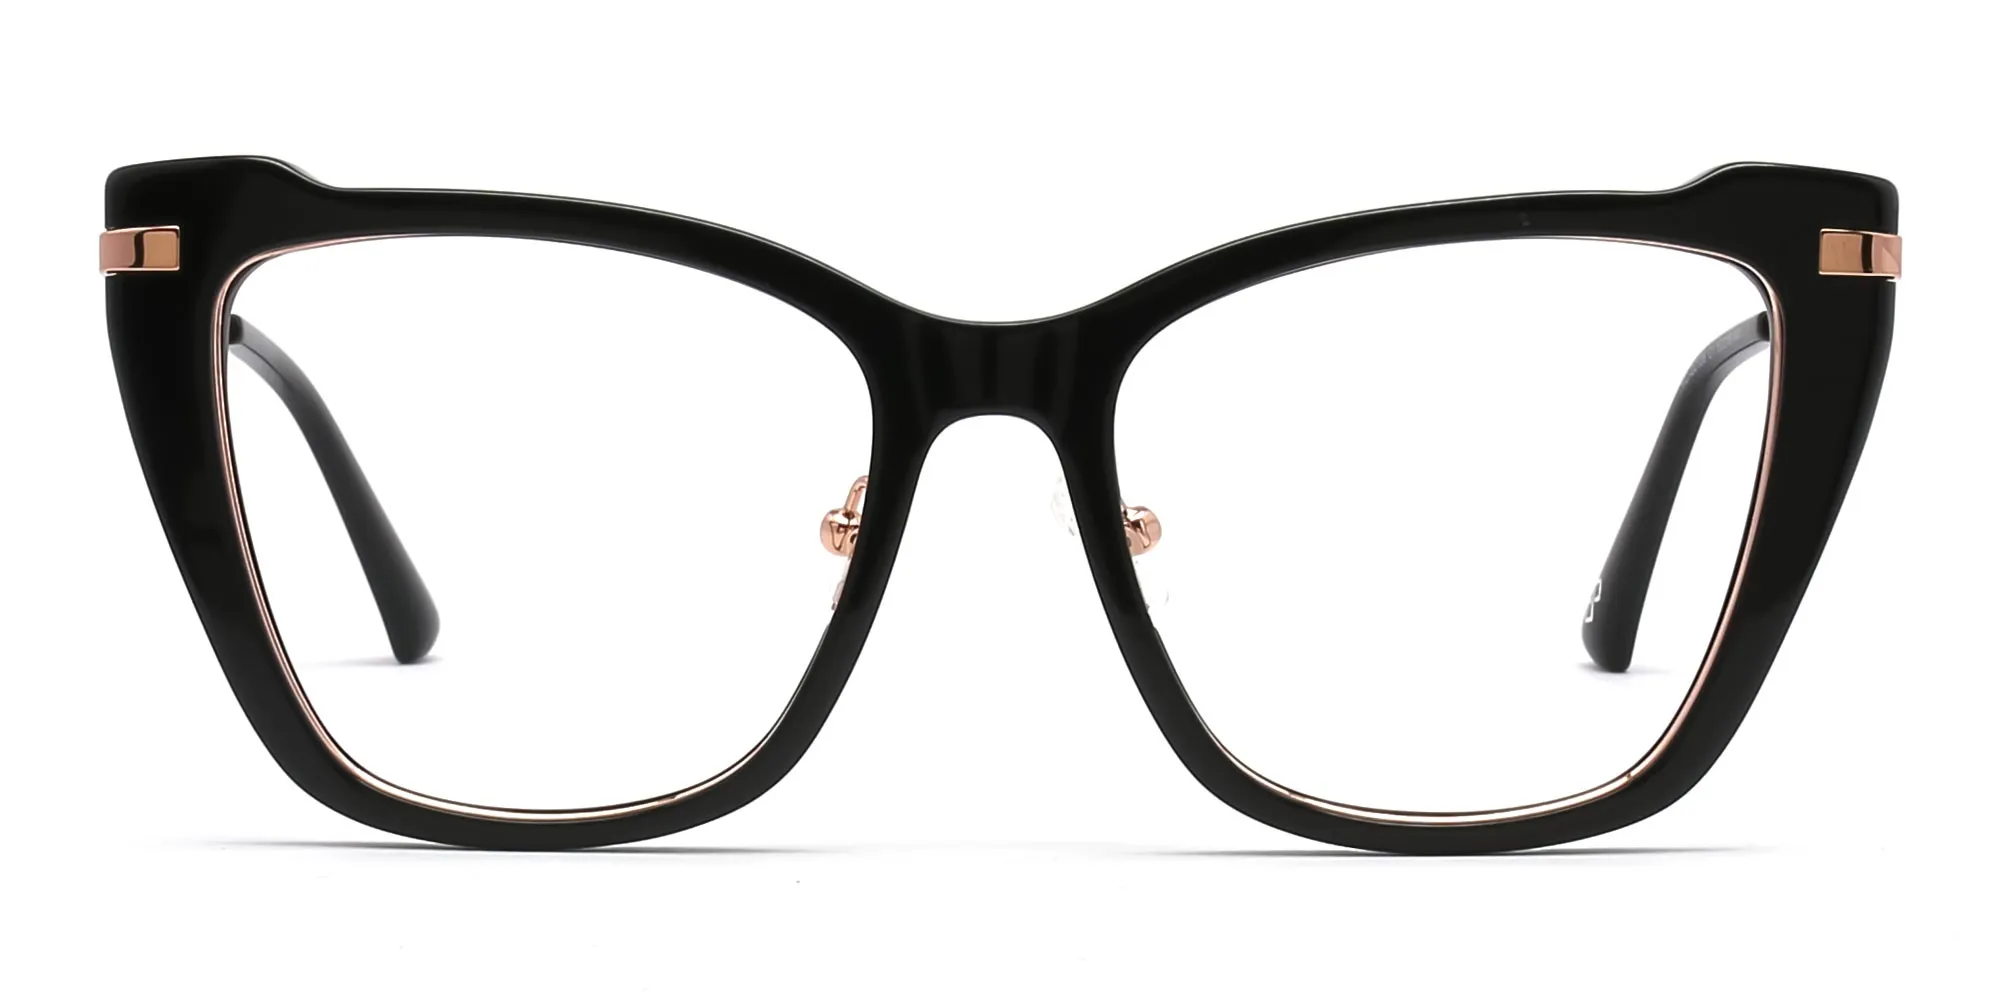 black cat eye spectacles